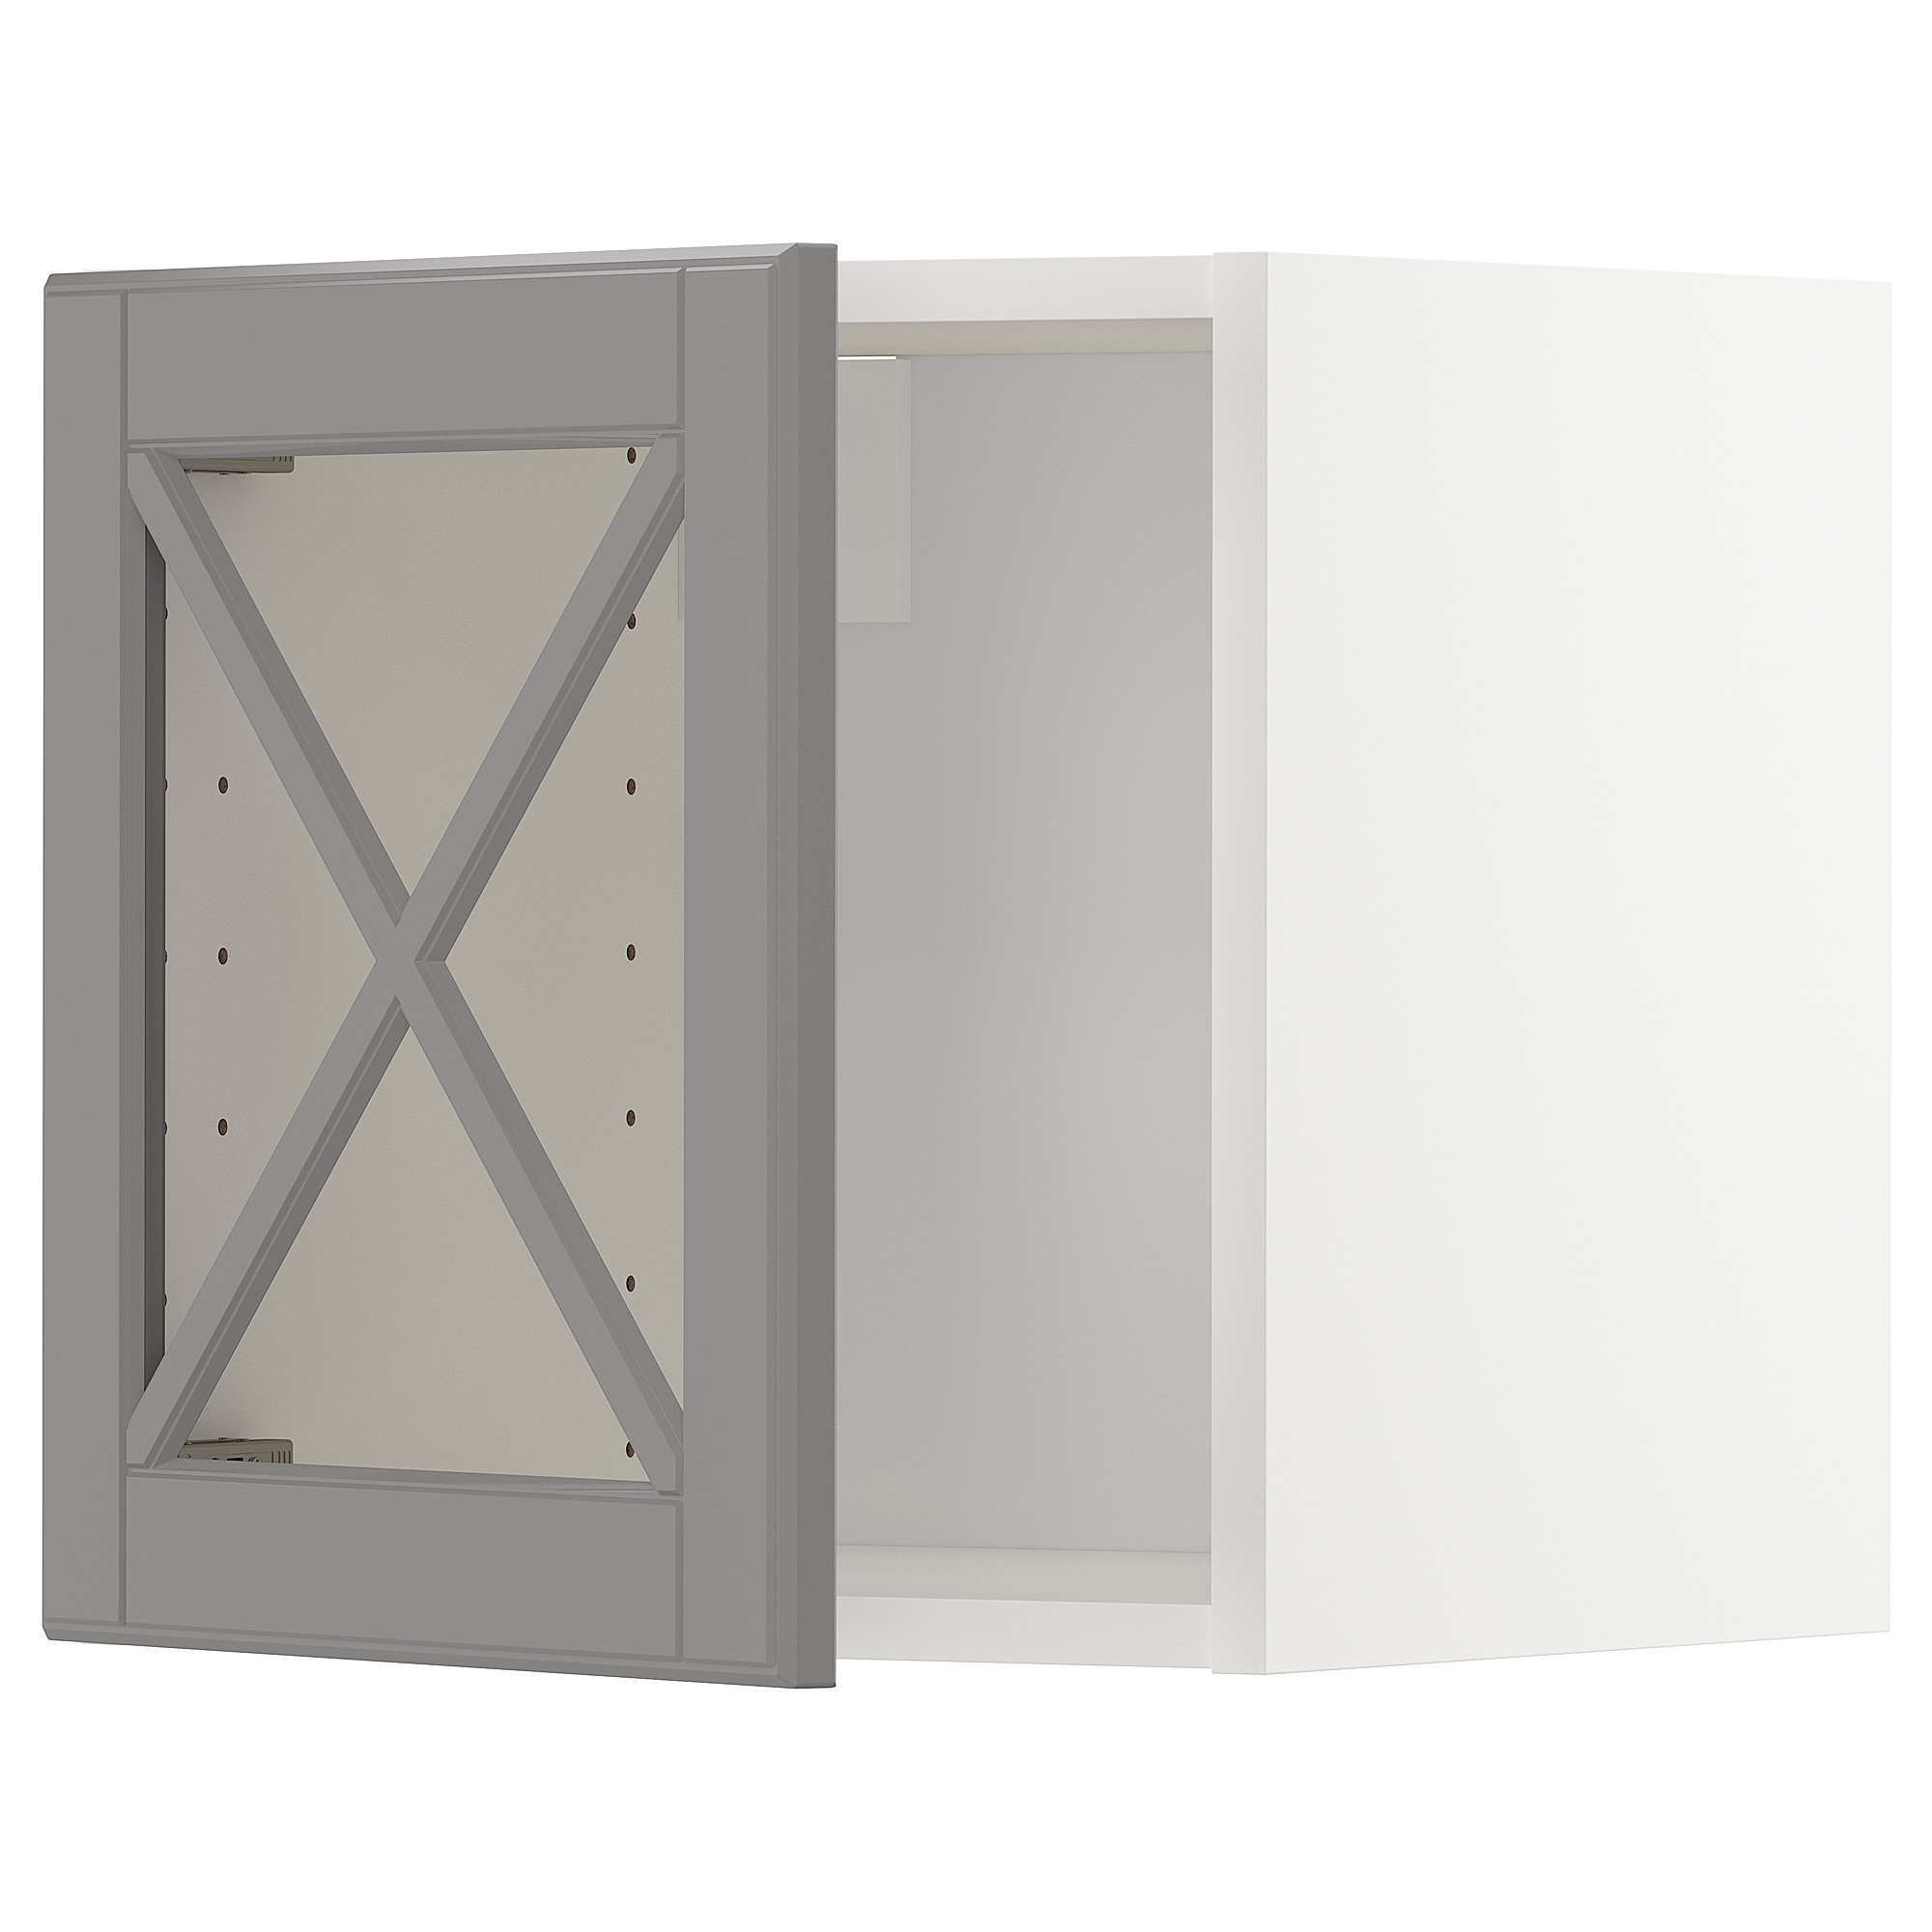 METOD wall cabinet w glass door/crossbar.